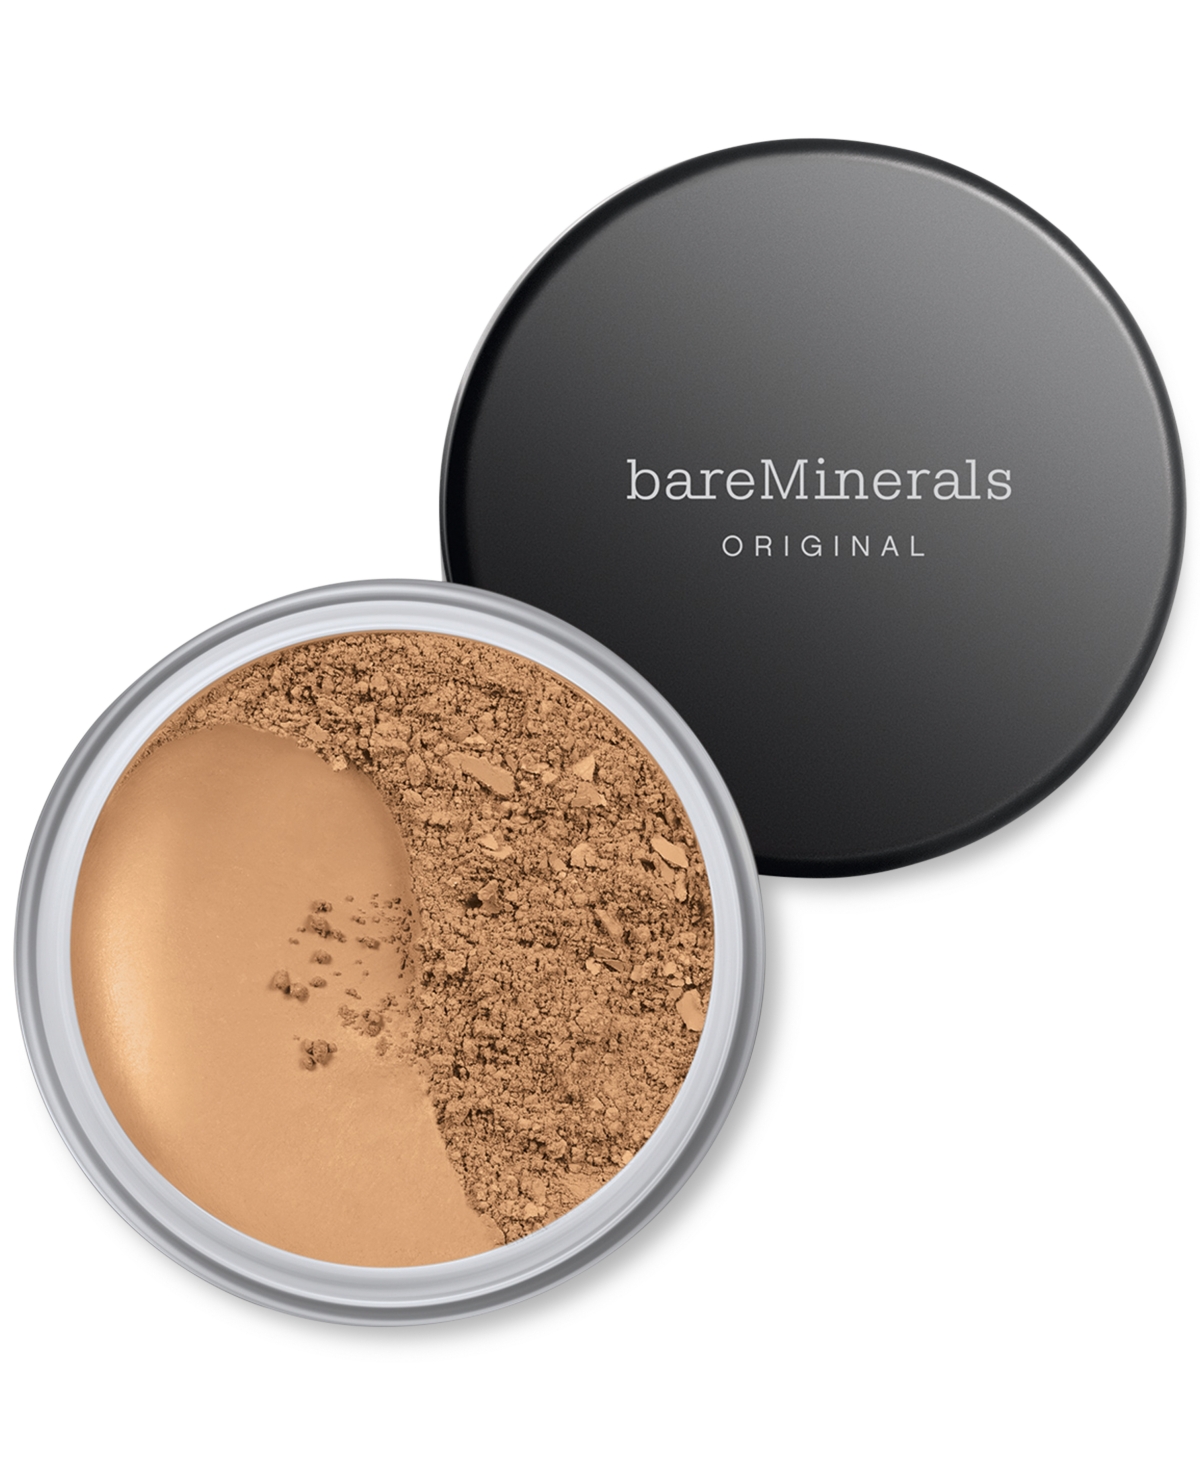 Bareminerals Original Loose Powder Foundation Spf 15 In Golden Tan  - For Medium To Tan Skin Wit